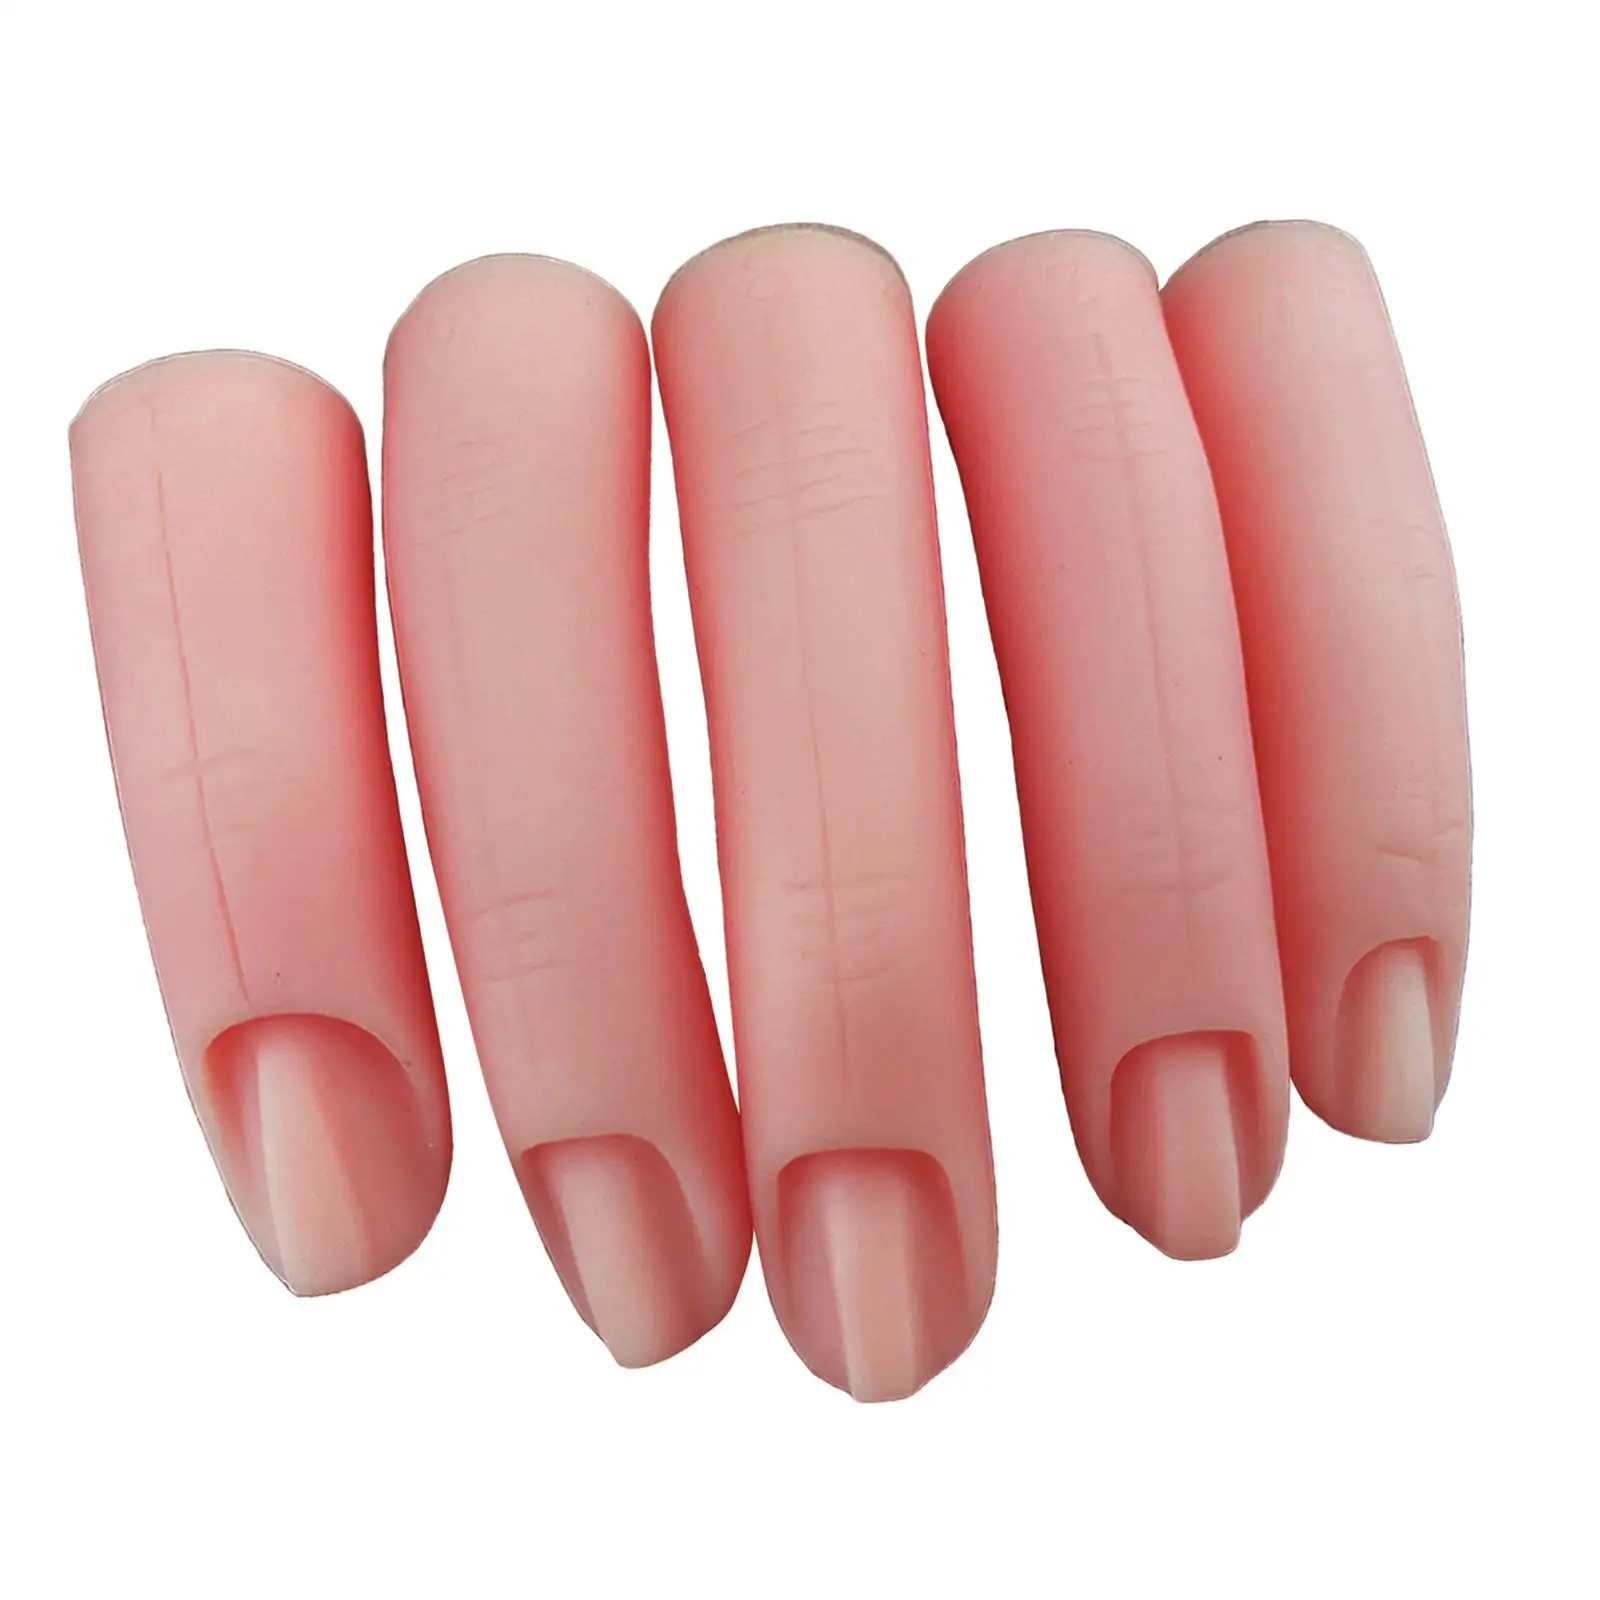 Silicone Practice Finger Manicure False Fingers for Nails Practice Beginner